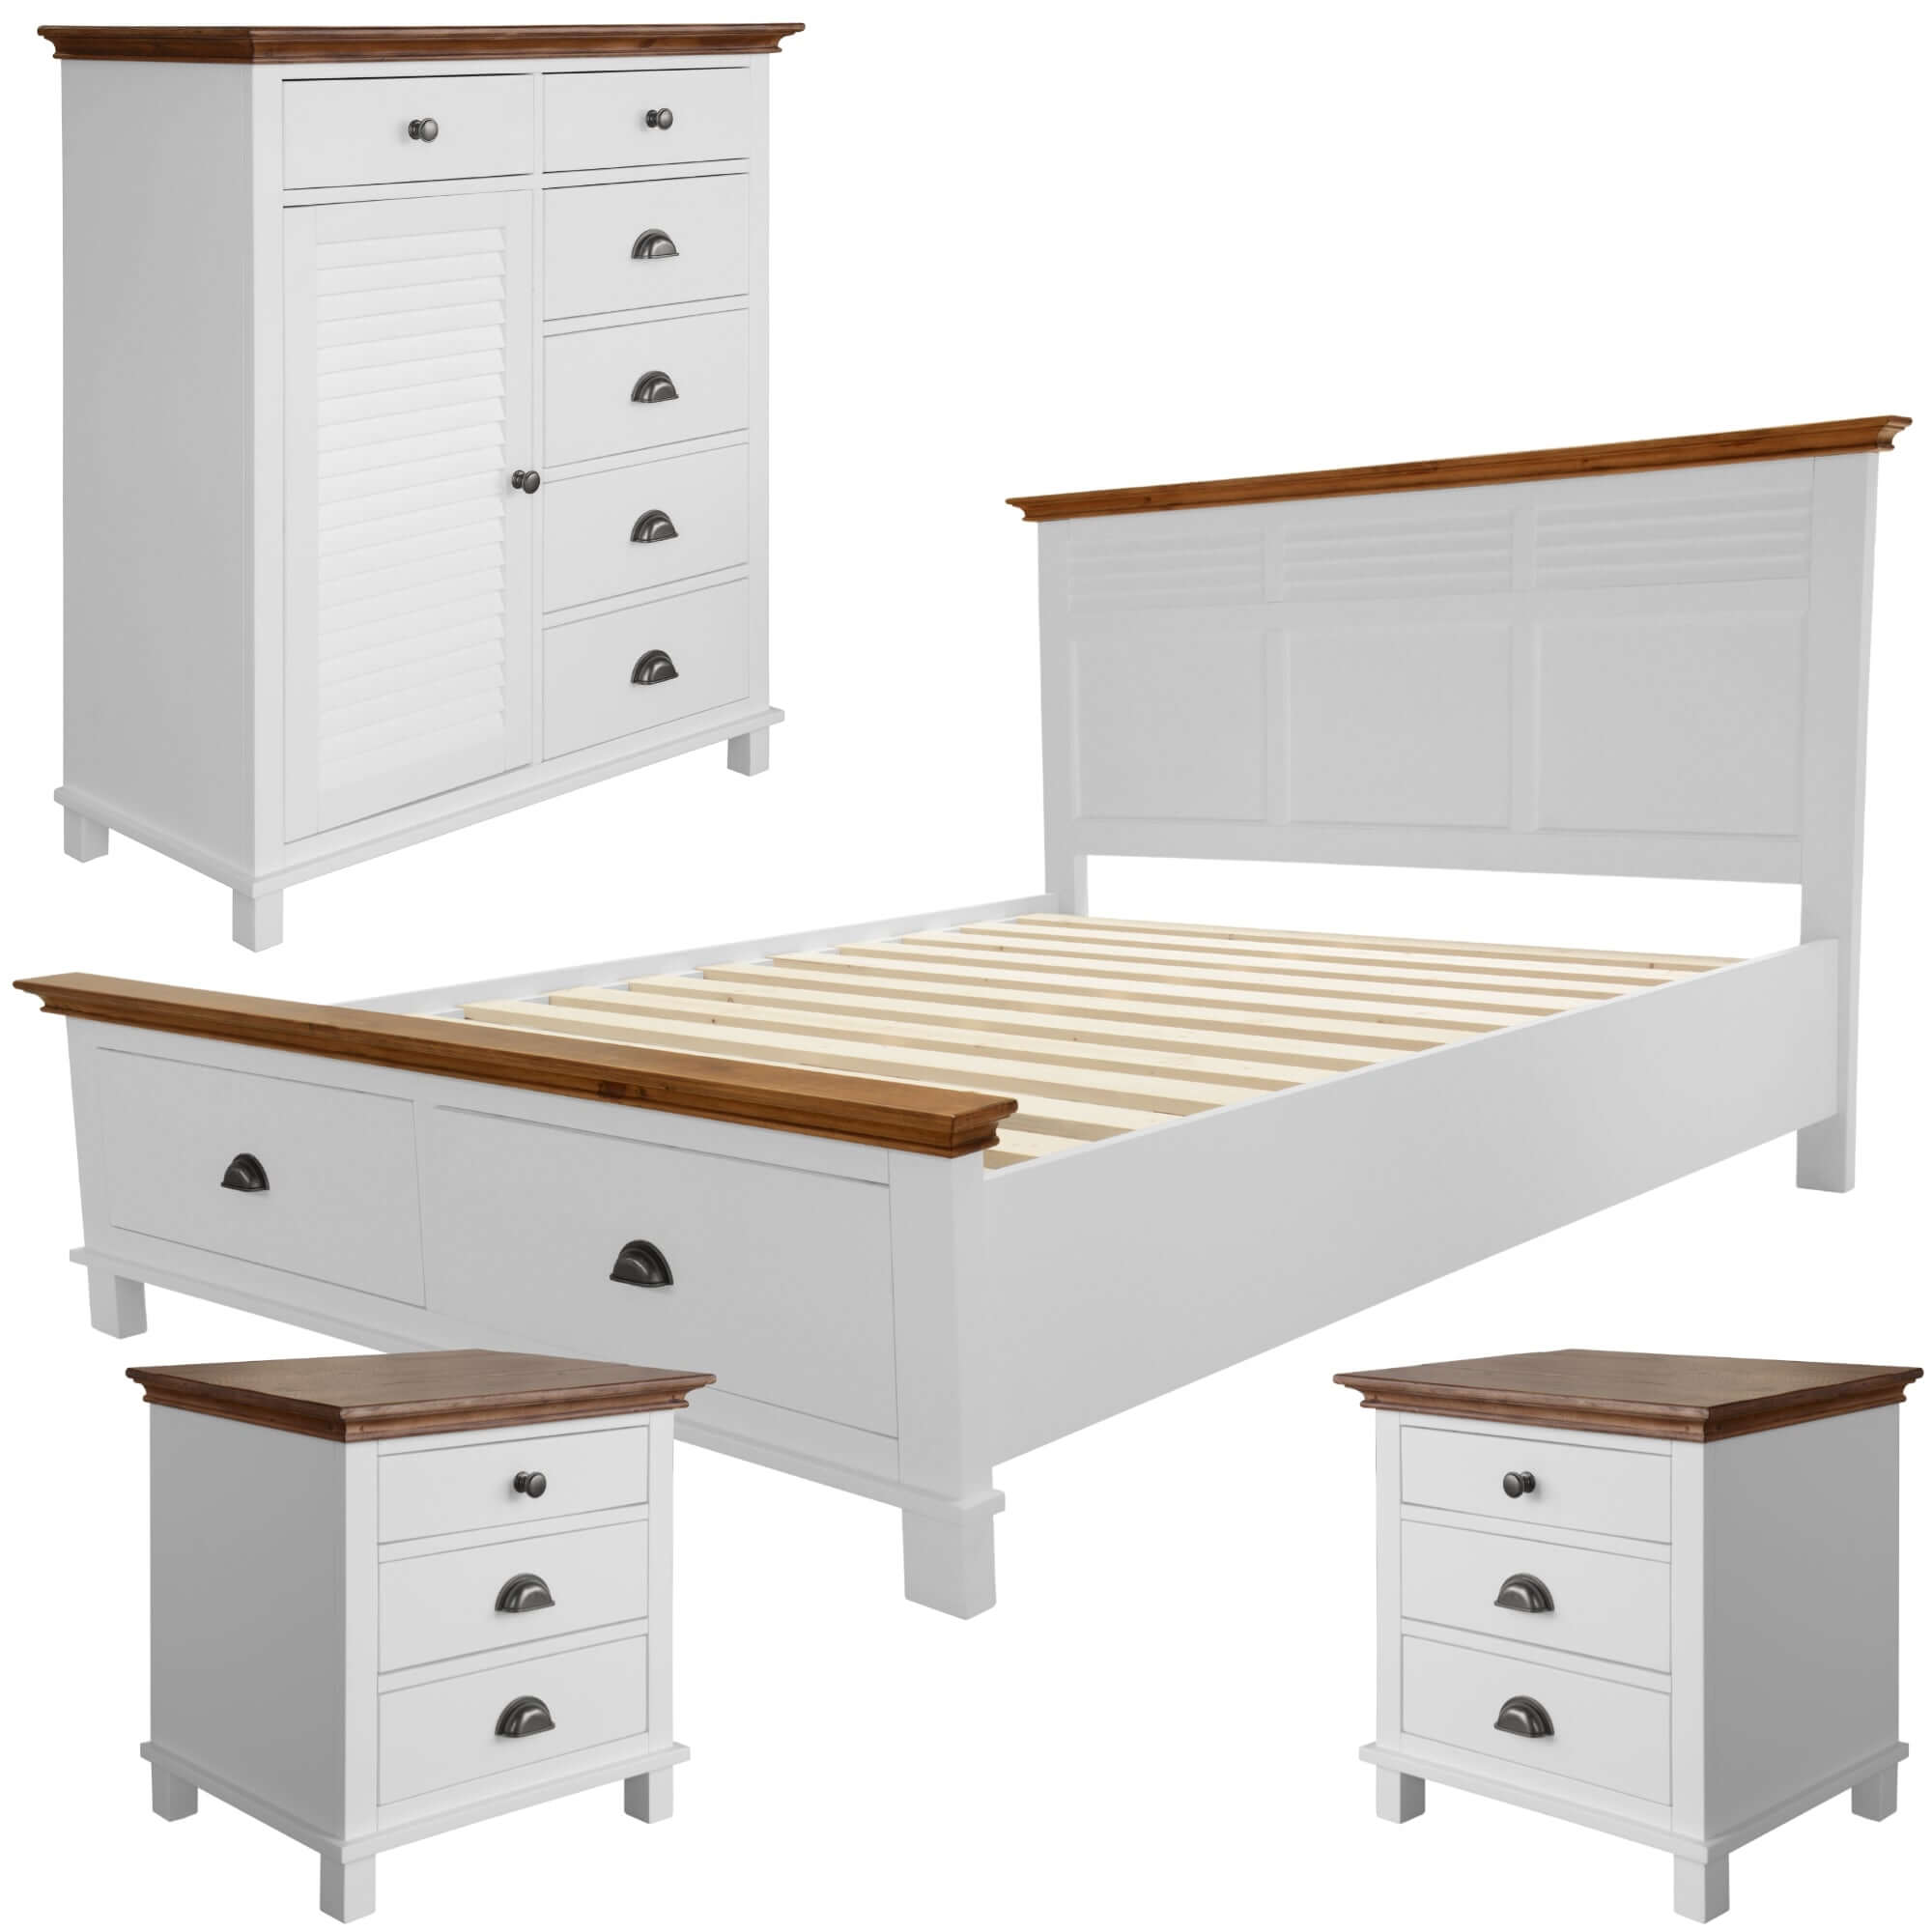 Virginia Queen Bed Suite in White - Hampton Style-Upinteriors